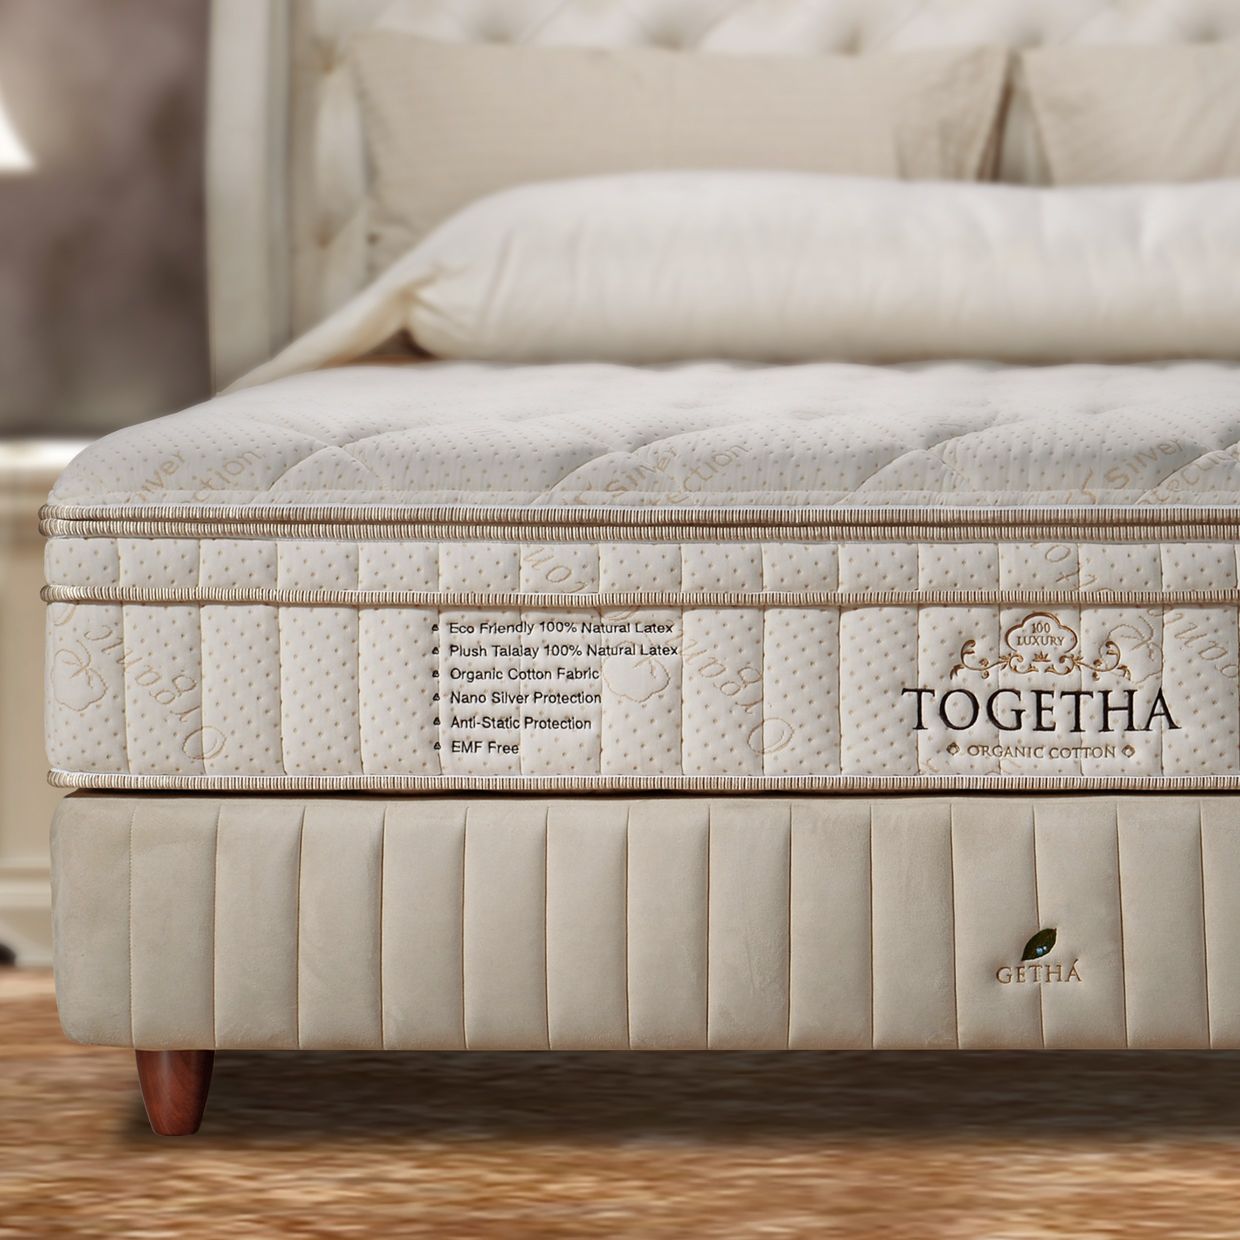 Togetha Luxury 100 Mattress with plush comfort